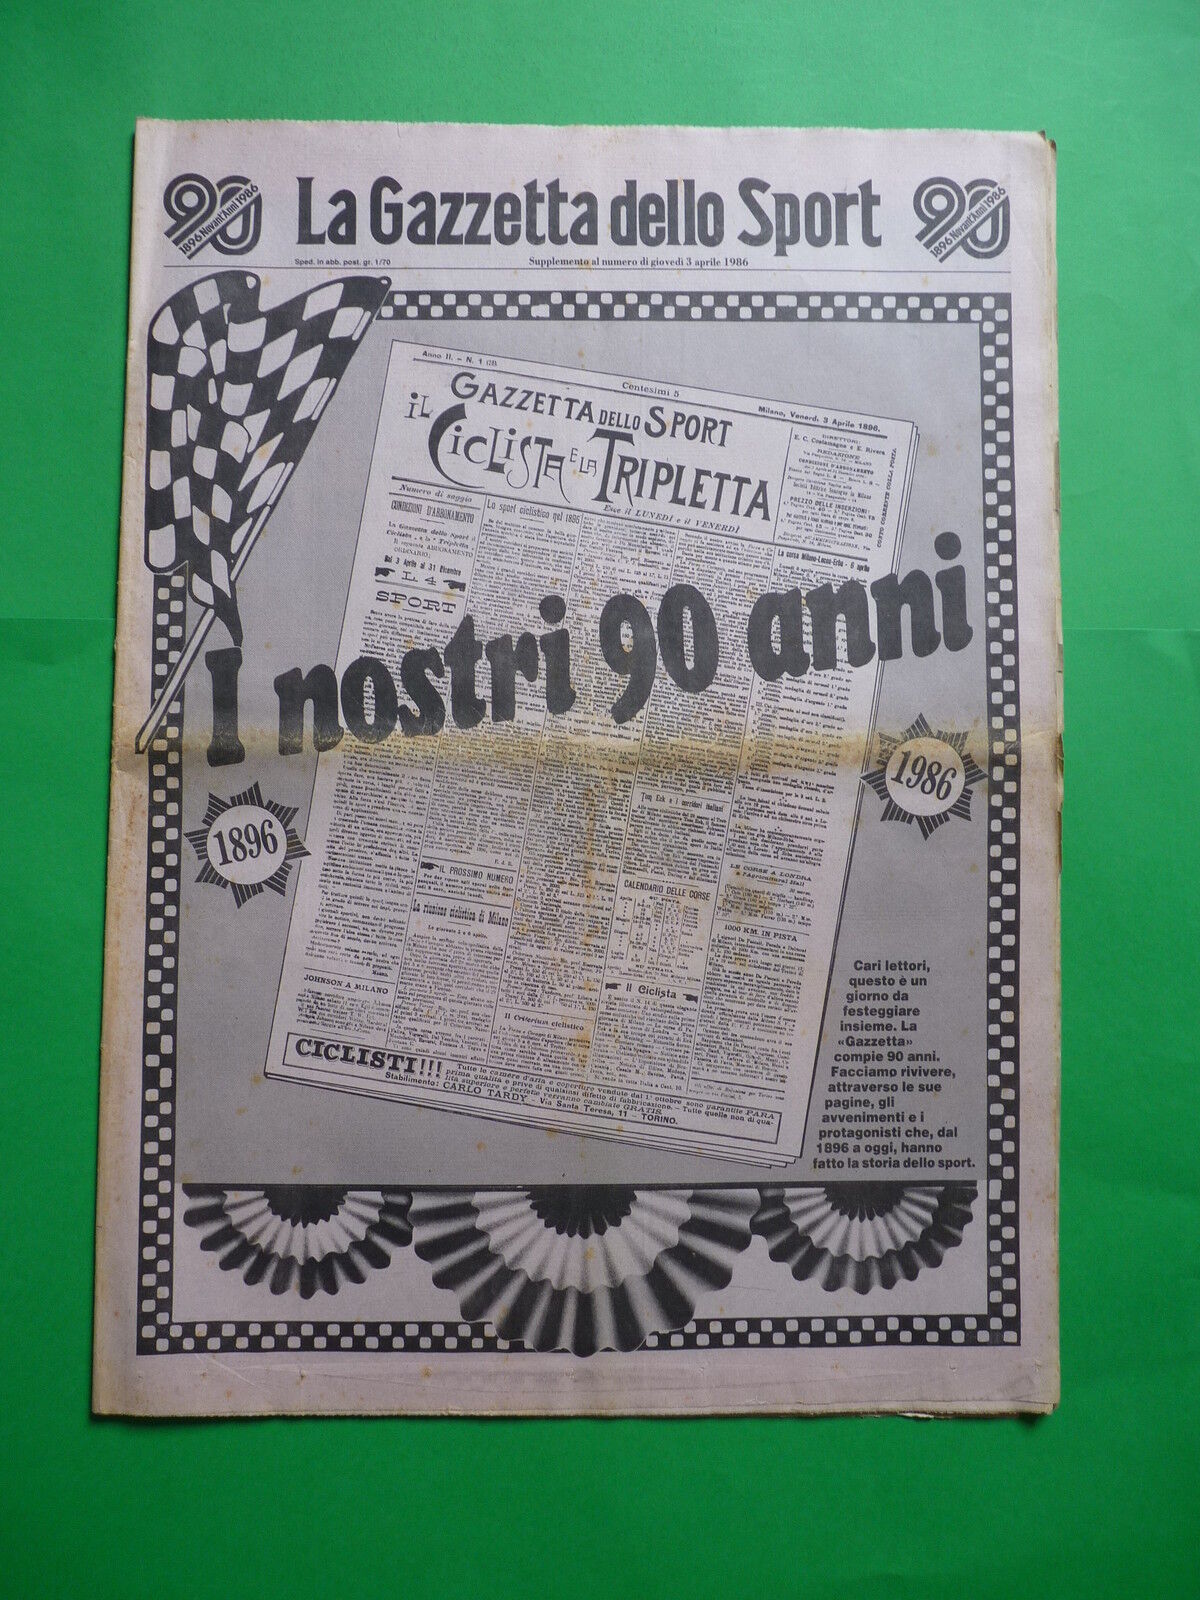 The Journal Screen Sport Anniversary Nostri 90 Years 1896-1986 Novant Health'